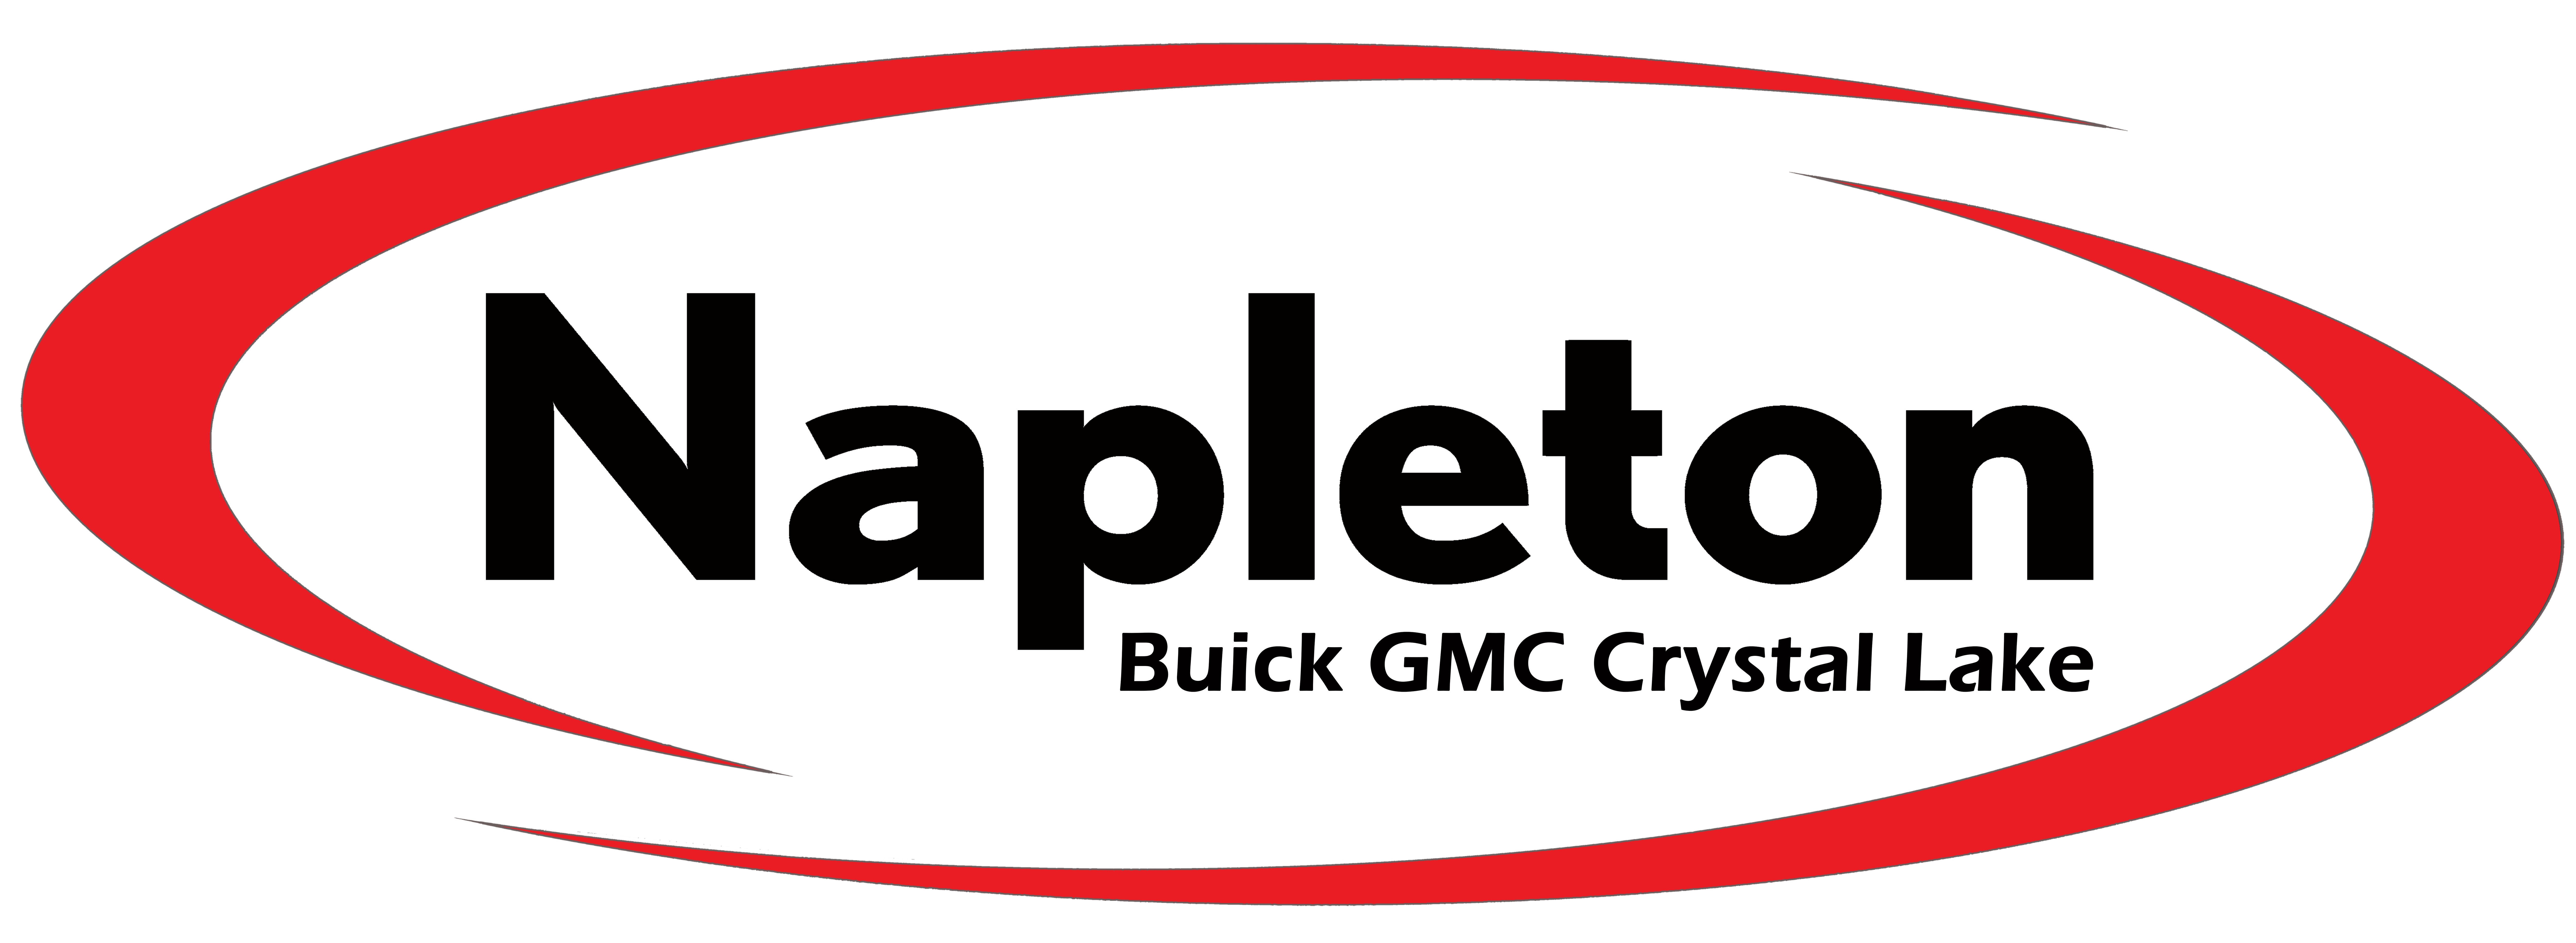 Napleton Logo Crystal Lake 300 DPI[1]